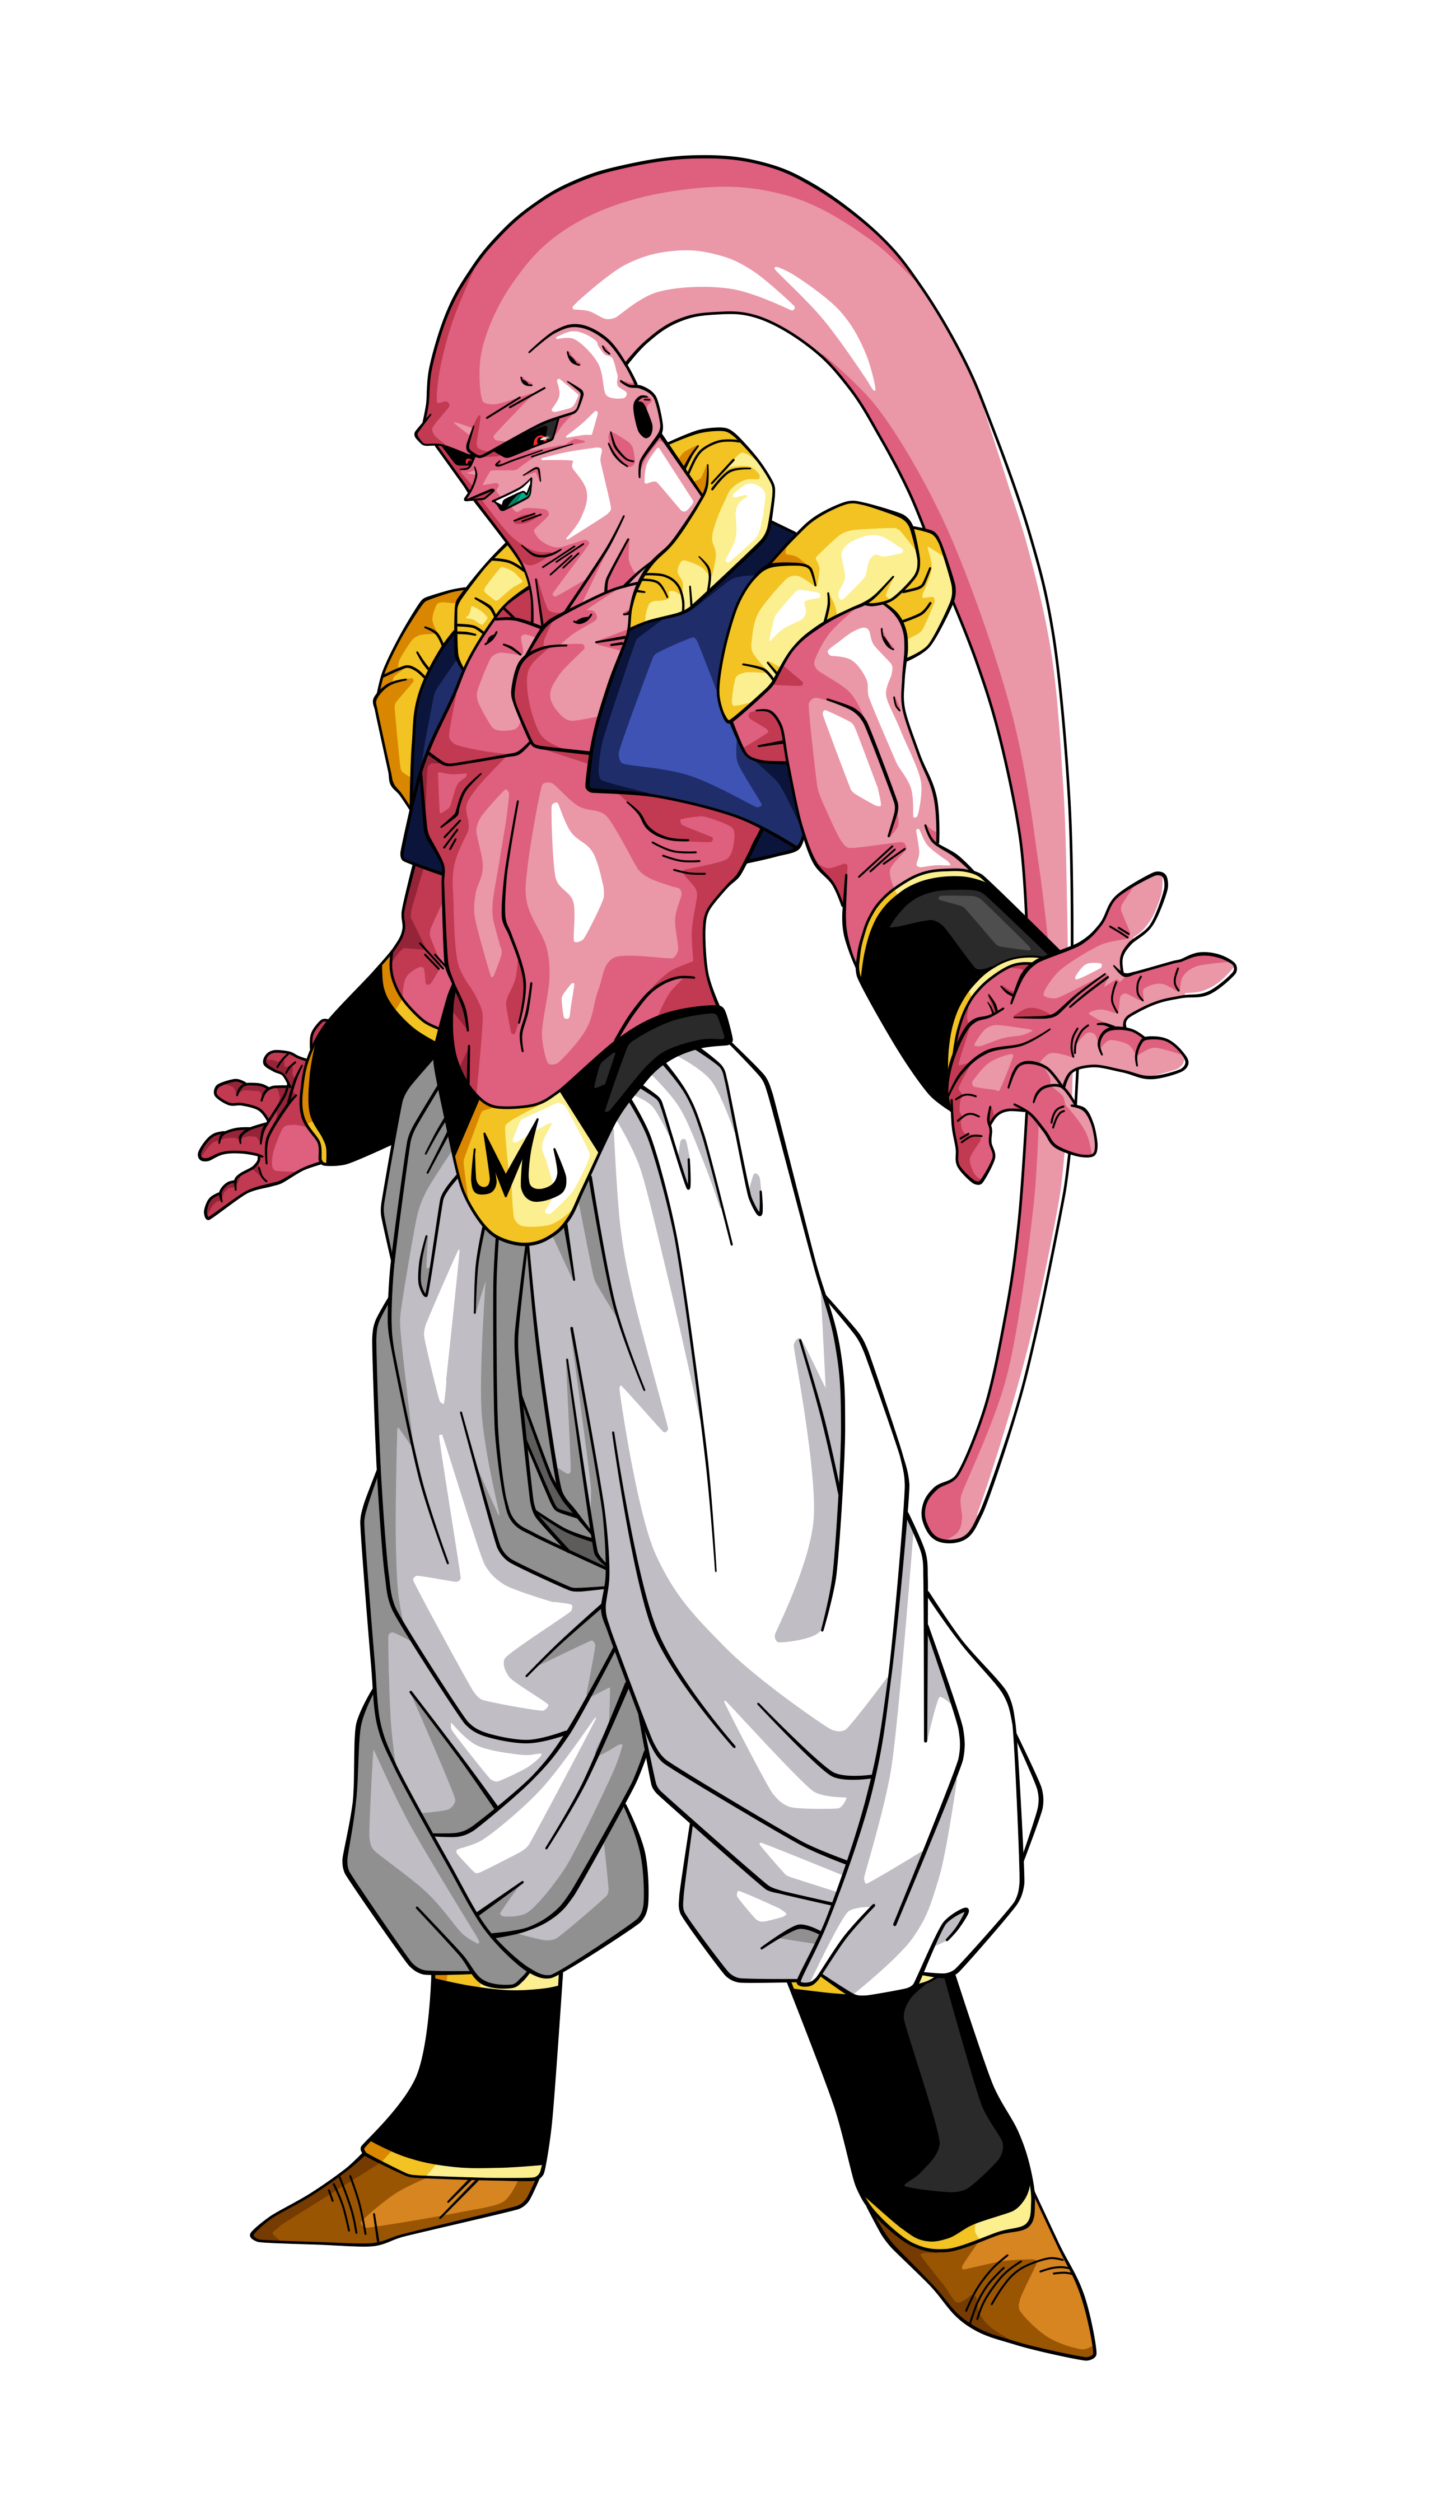 Troncos de Gotenks Goku Majin Buu, dragon ball z, personagem